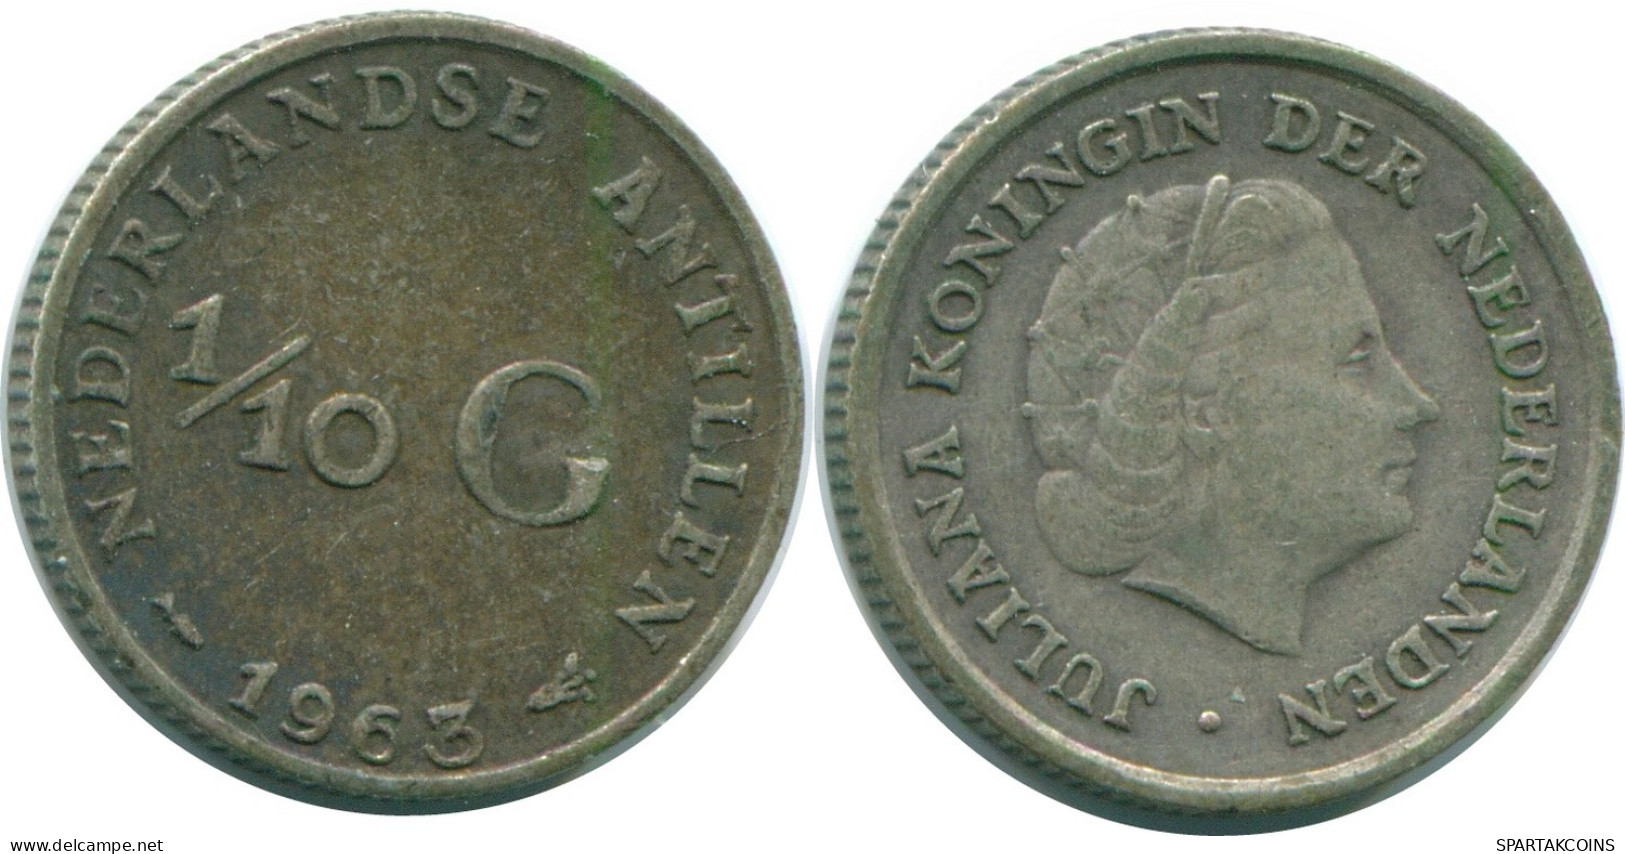 1/10 GULDEN 1963 NIEDERLÄNDISCHE ANTILLEN SILBER Koloniale Münze #NL12504.3.D.A - Netherlands Antilles